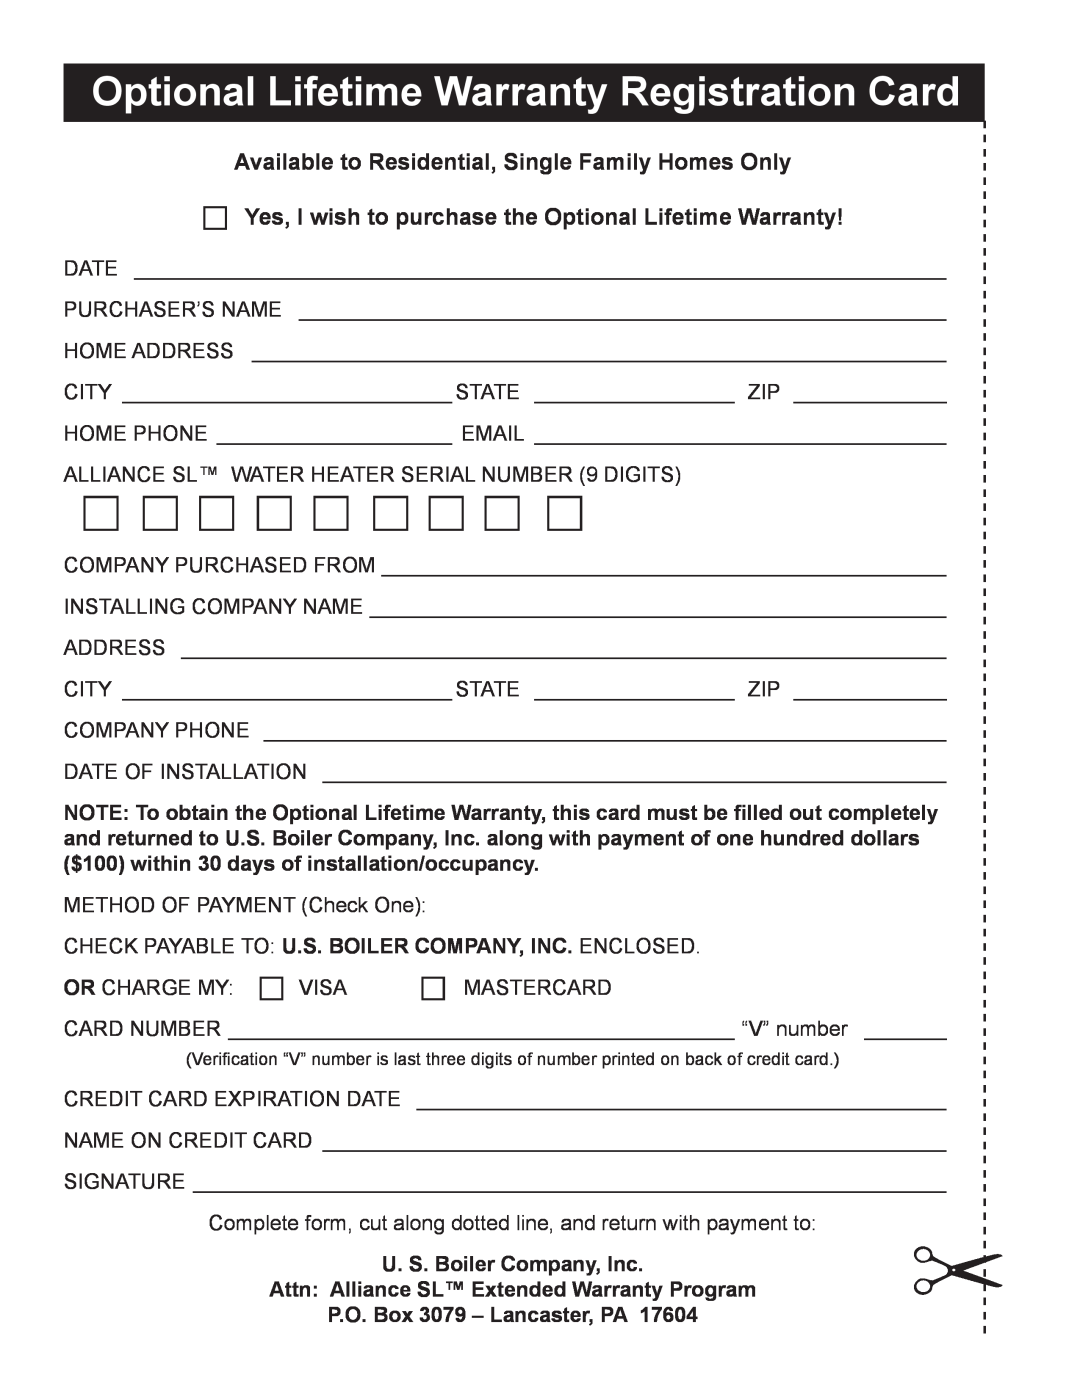 Burnham AL SL Optional Lifetime Warranty Registration Card, U. S. Boiler Company, Inc, P.O. Box 3079 - Lancaster, PA 